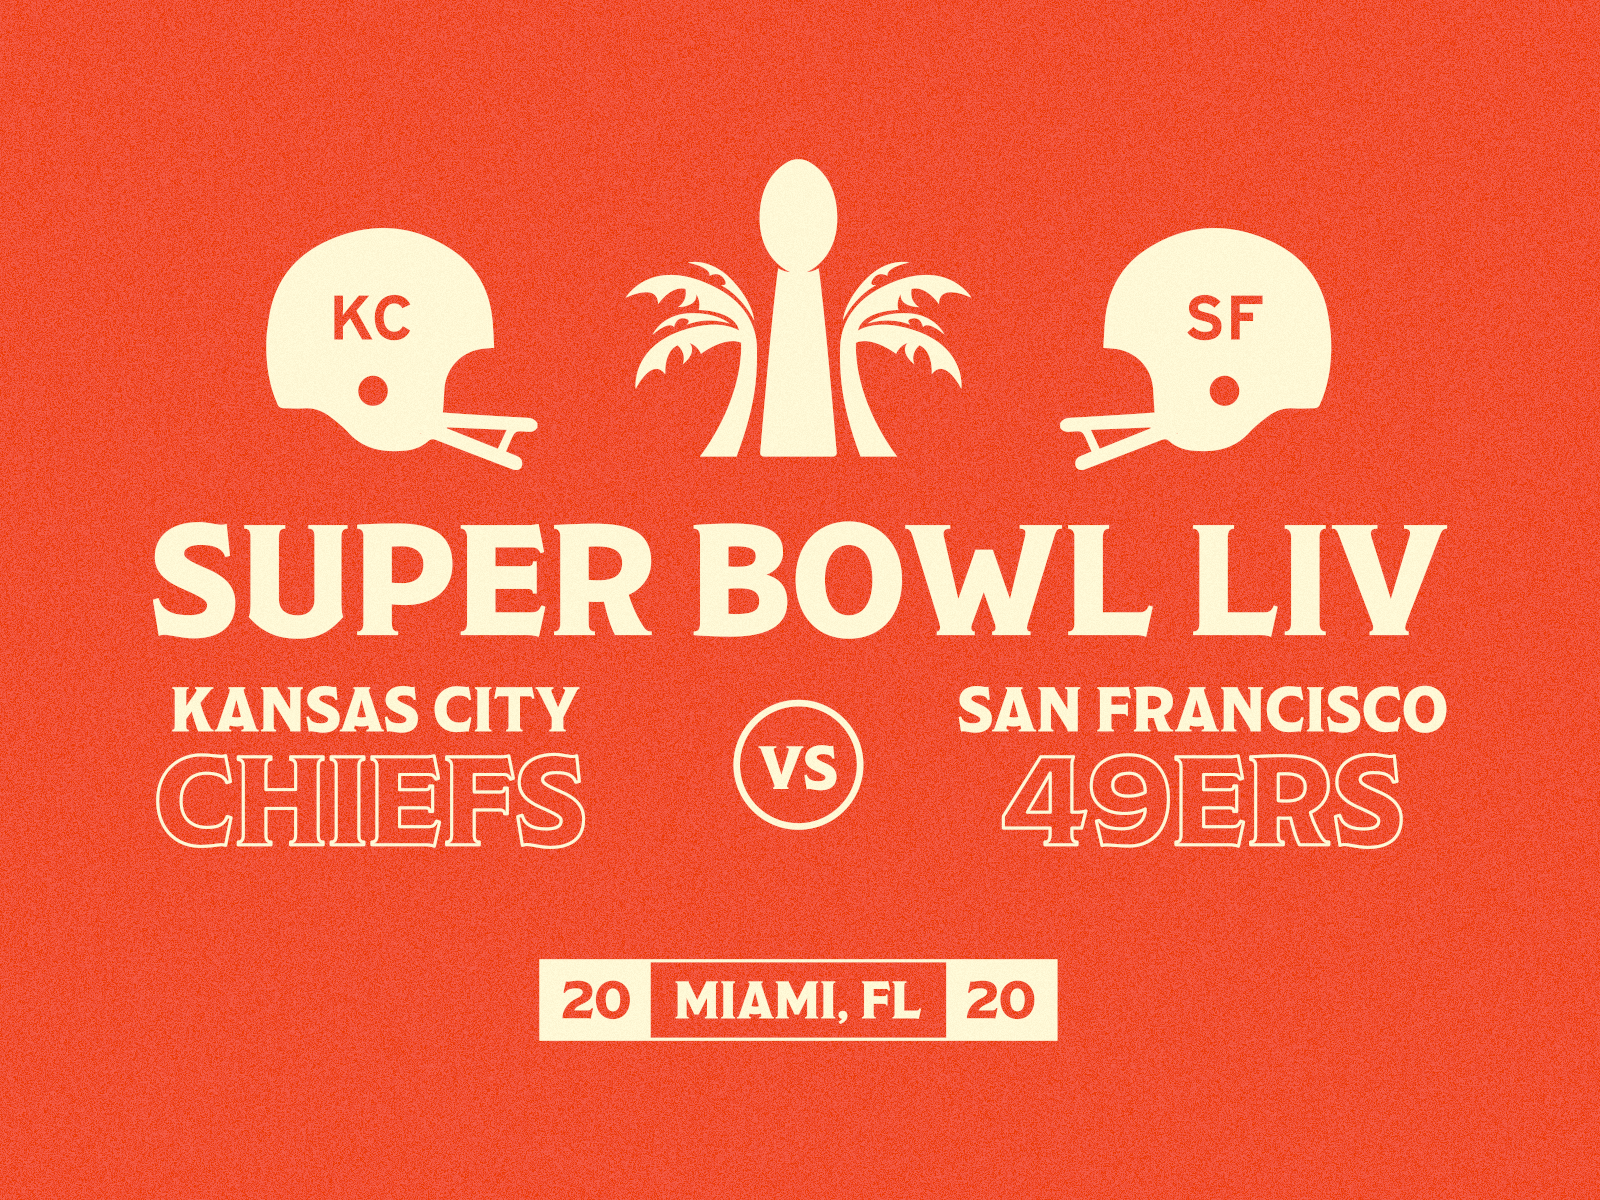 Super Bowl LIV Logo Concept by Michael Danger on Dribbble